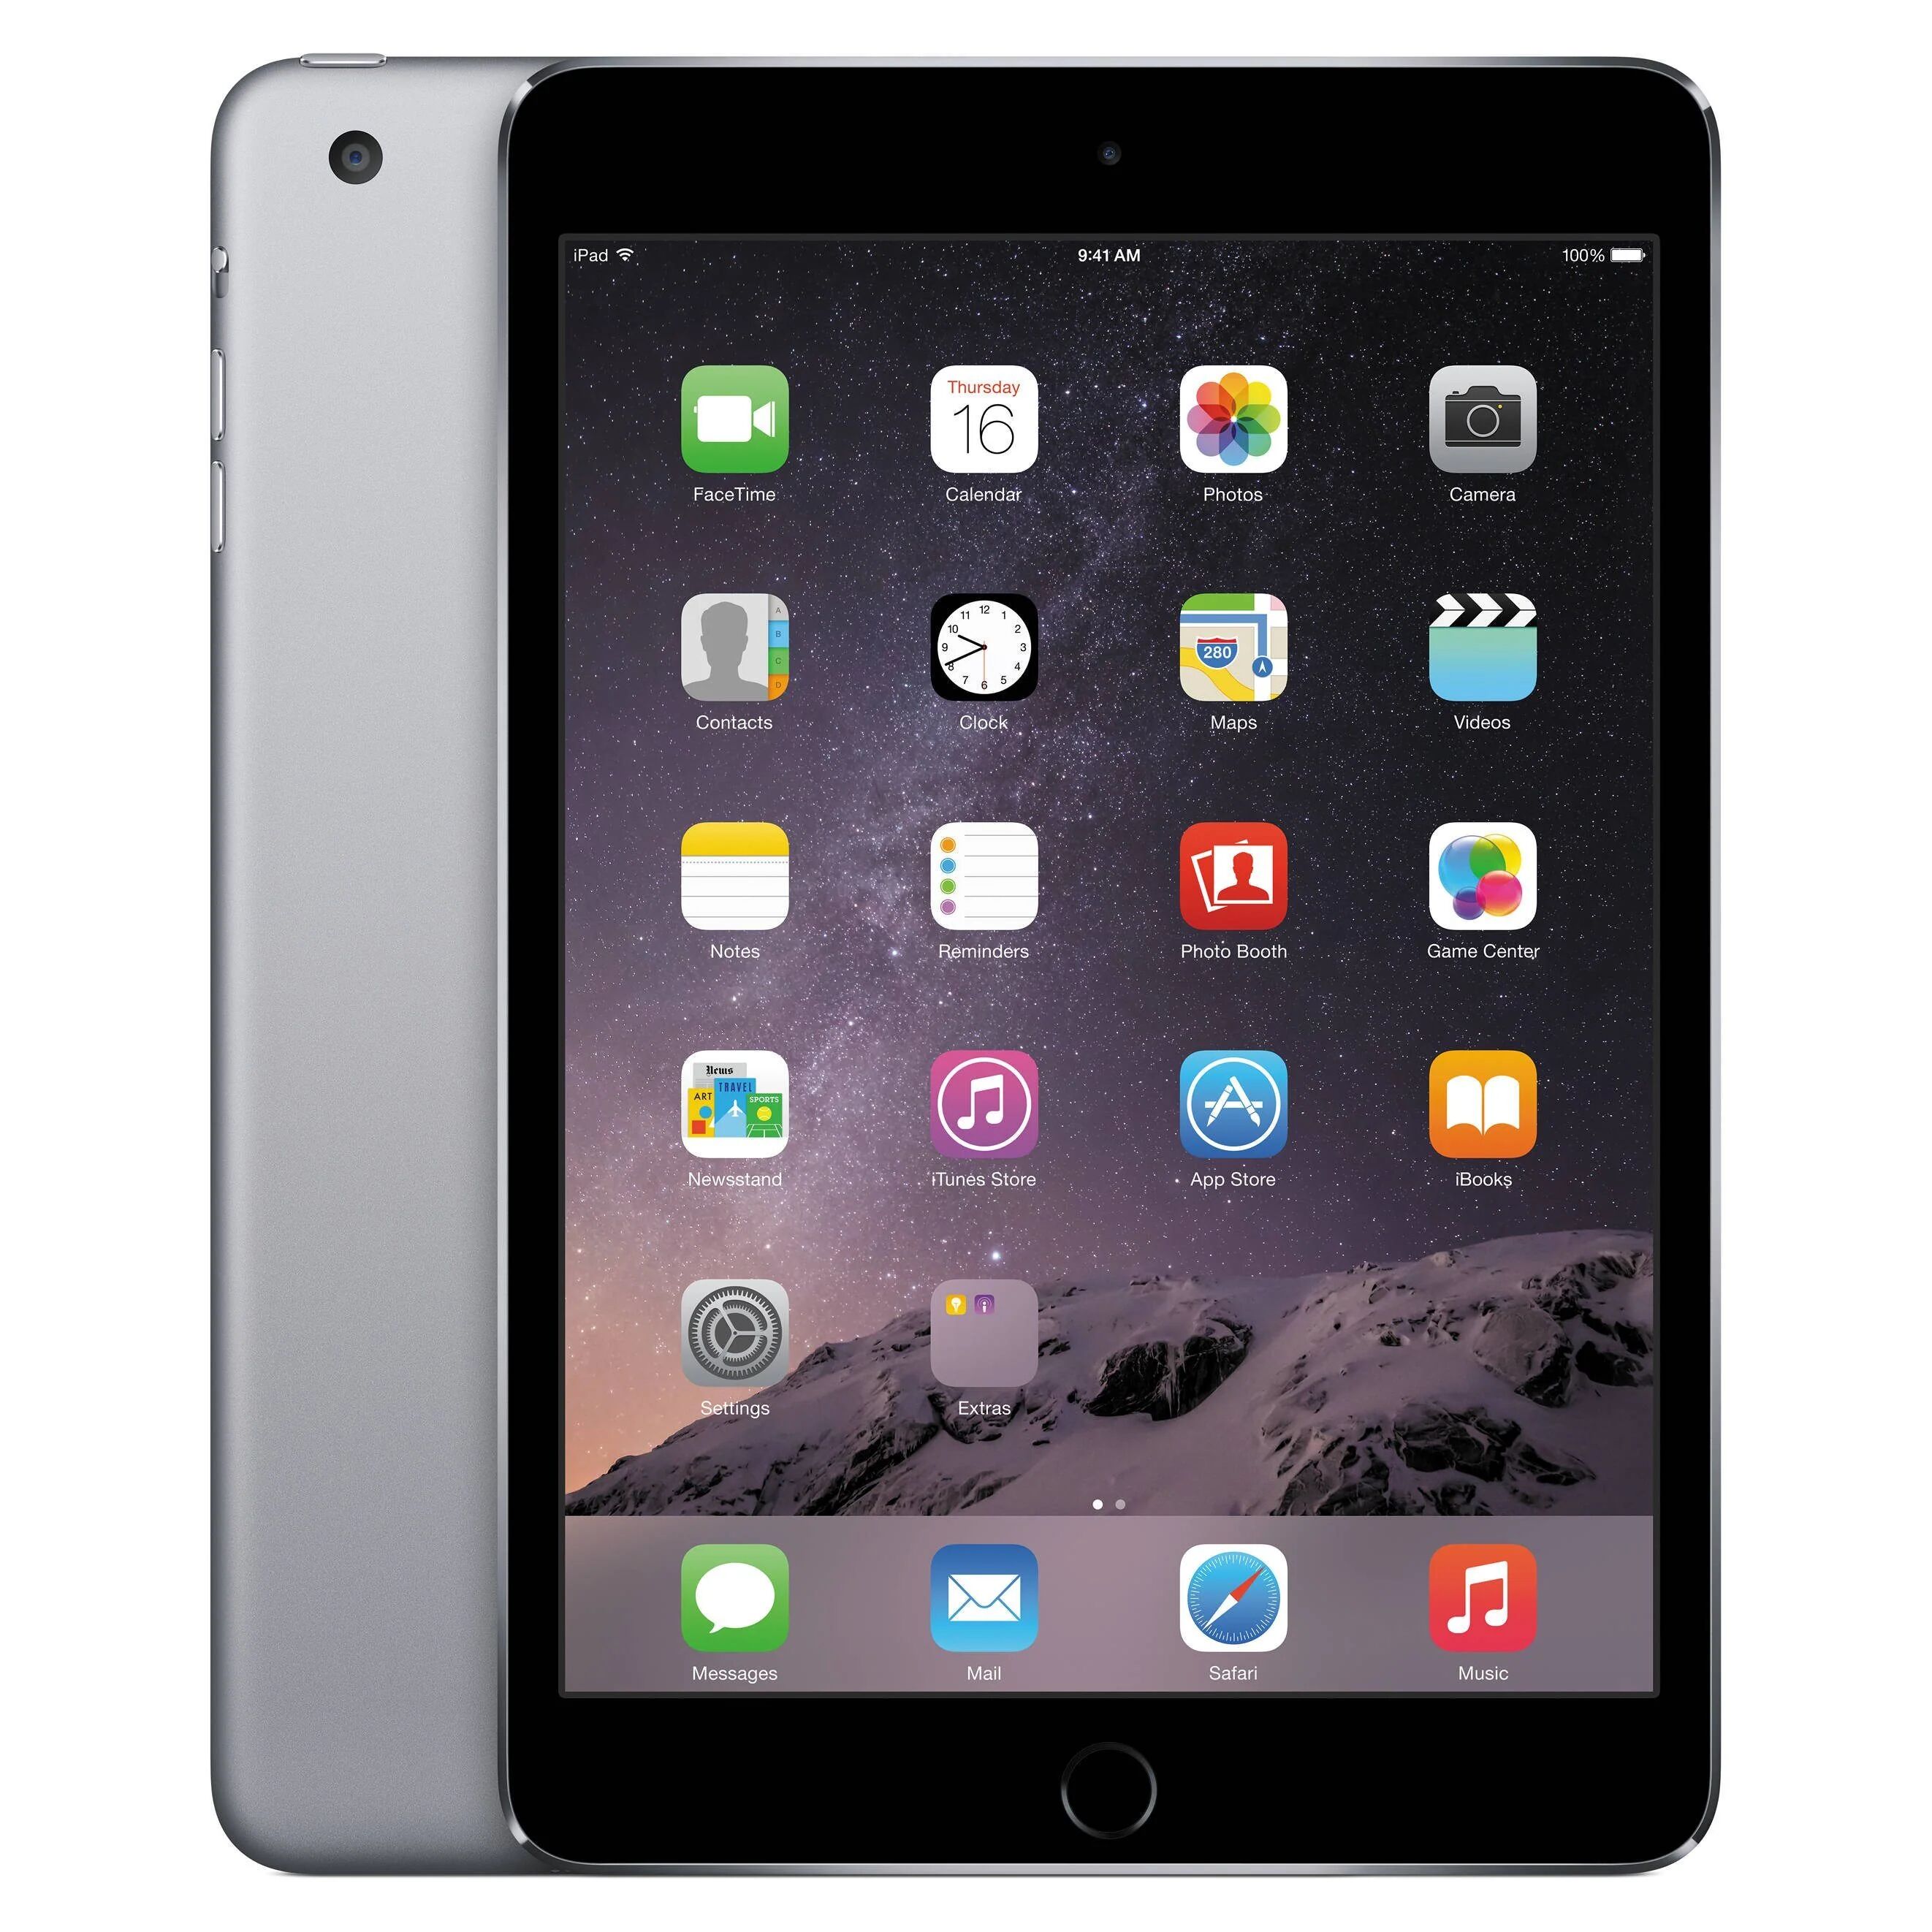 DailySale Apple iPad Mini 16GB Wifi (Refurbished)